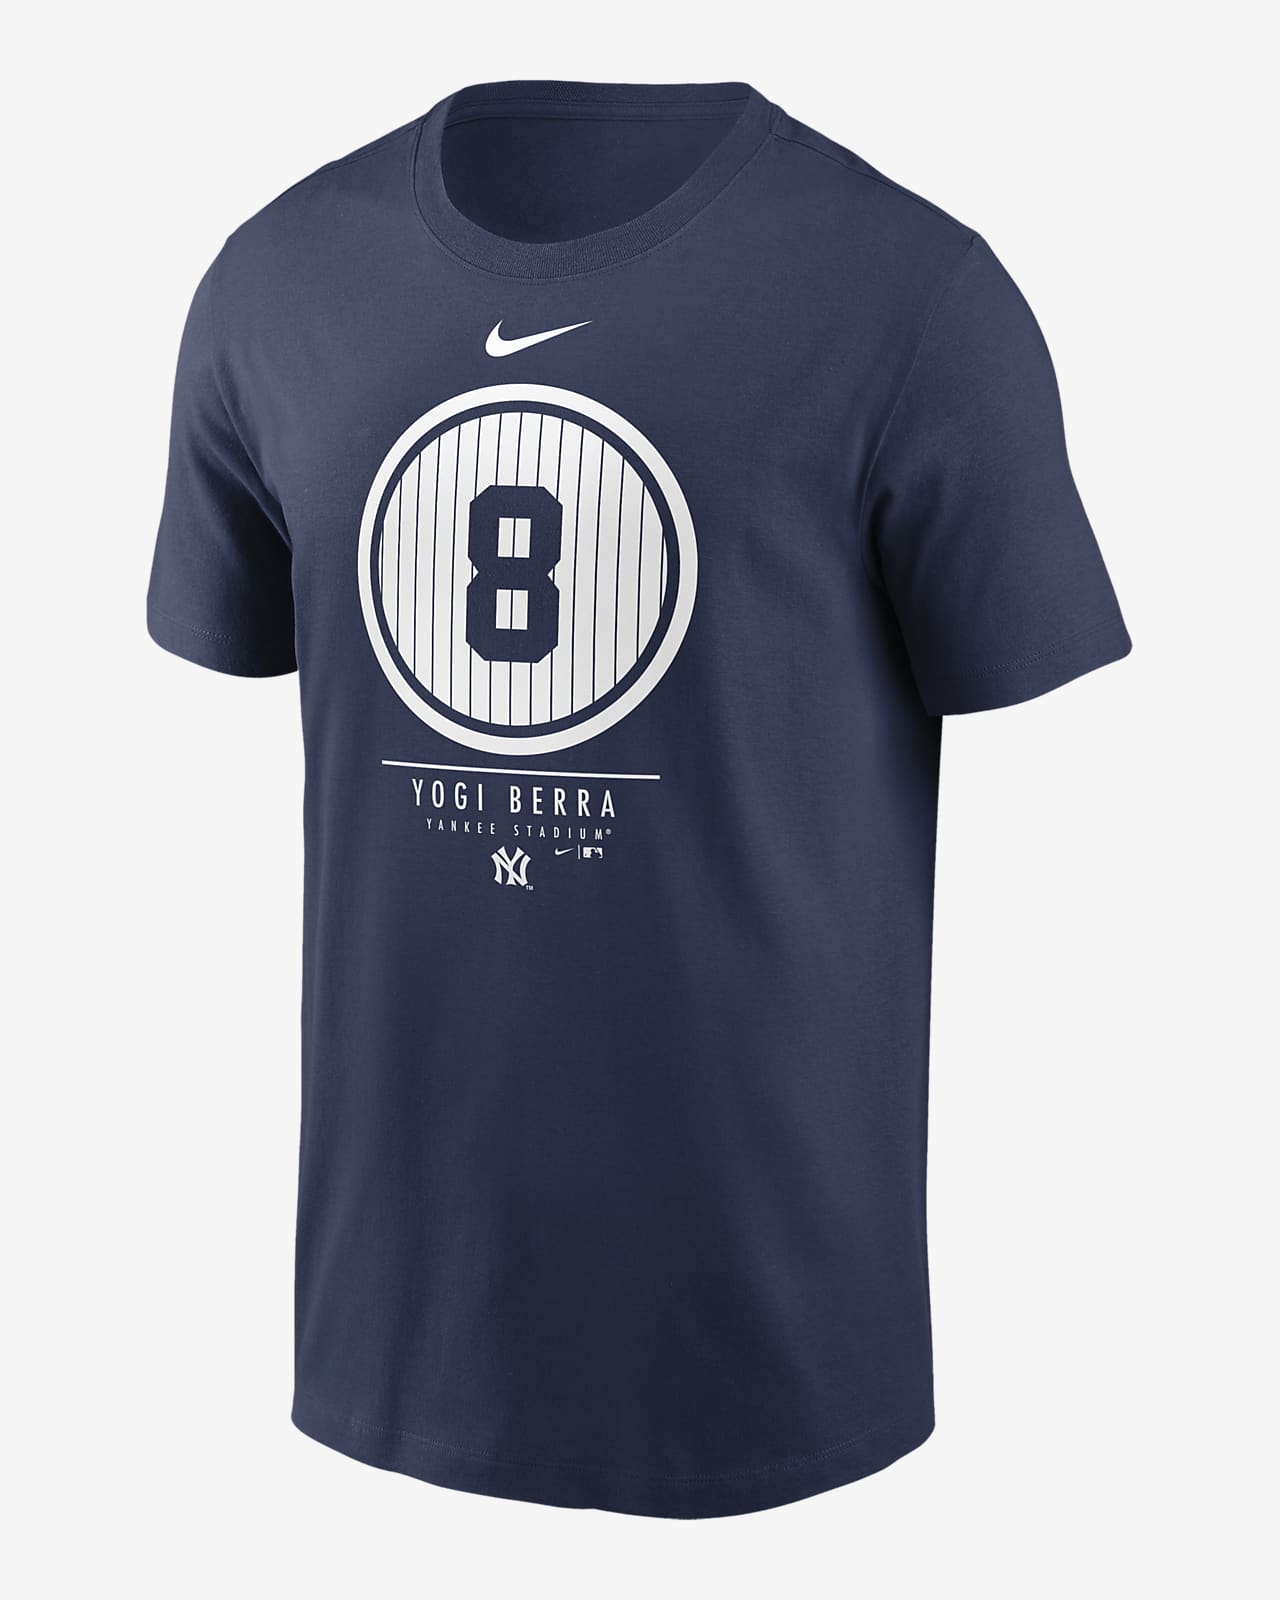 MLB New York Yankees (Yogi Berra) Men's T-Shirt